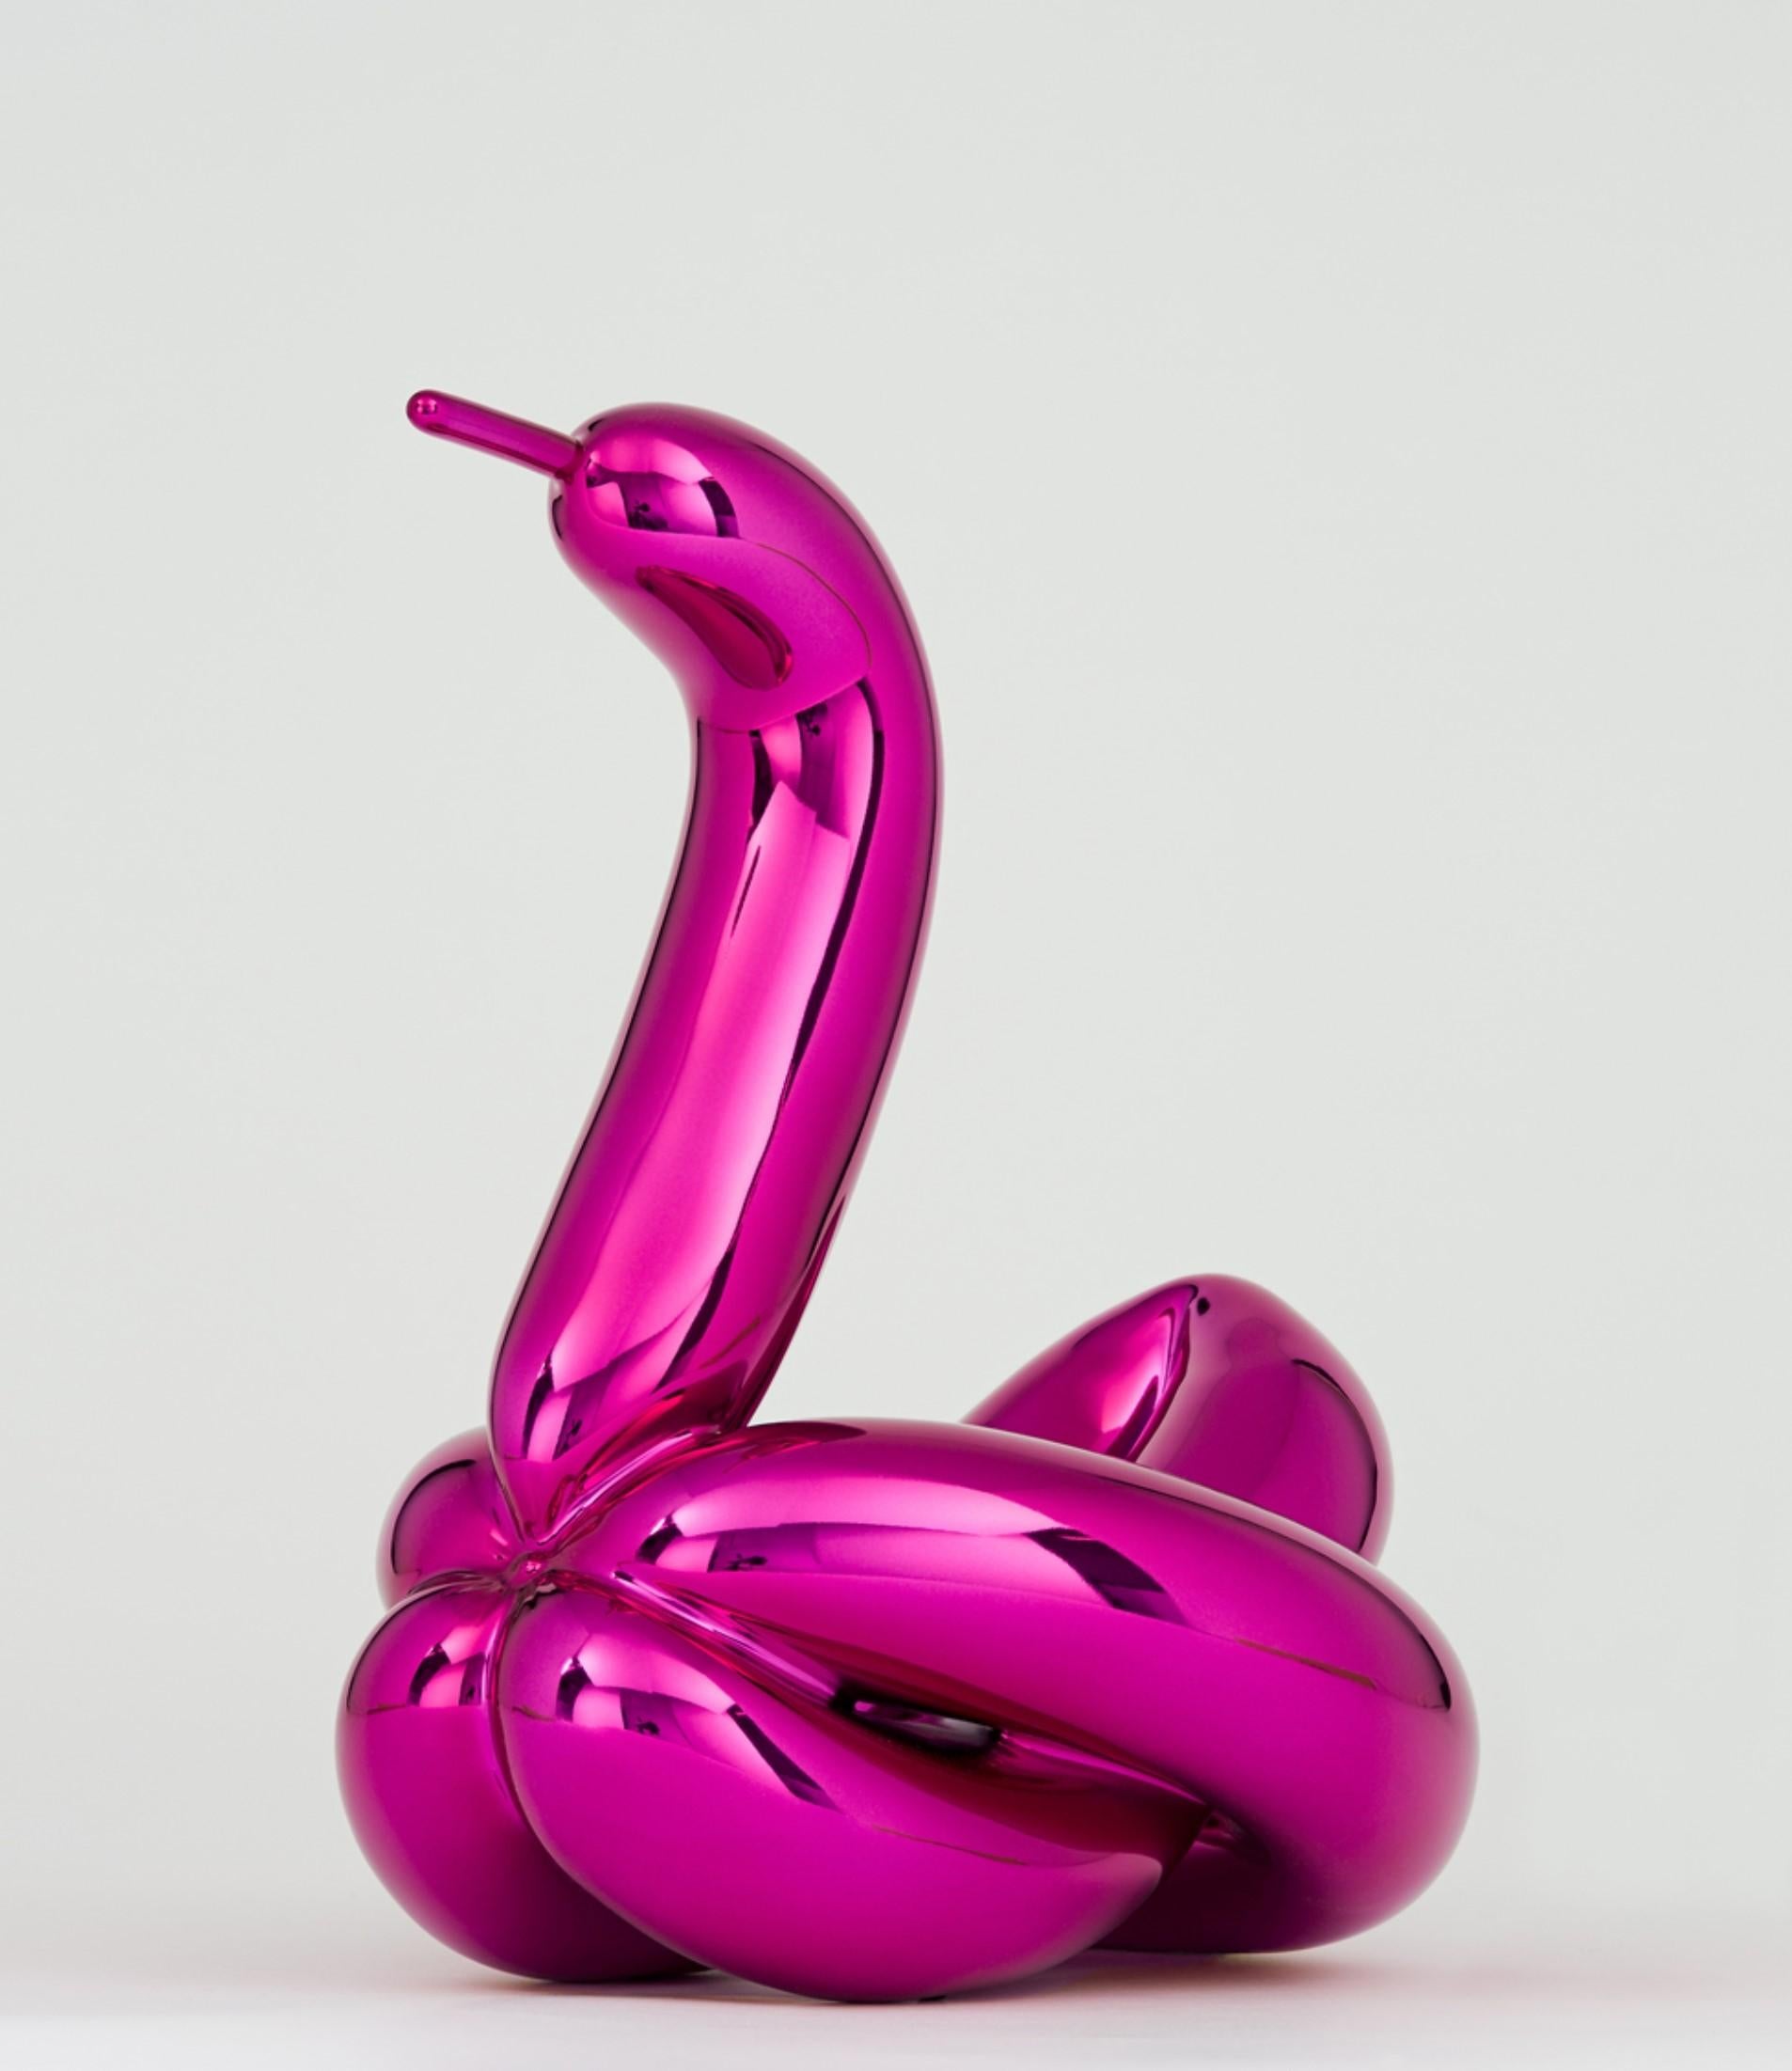 Ballon Swan Magenta - Sculpture by Jeff Koons